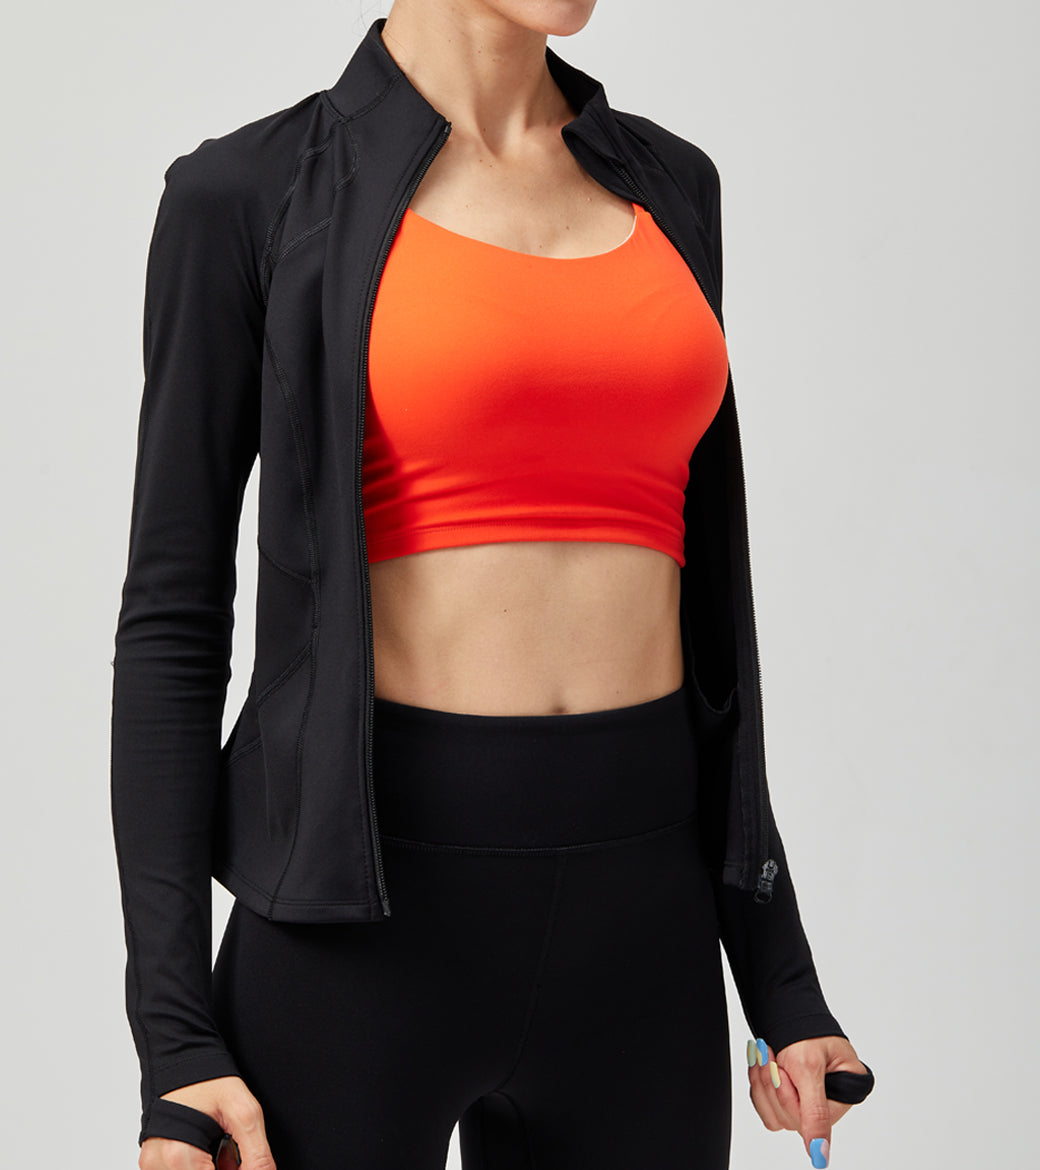 LOVESOFT Womens Black Side Pocket Thermal Gym Jacket With Zipper